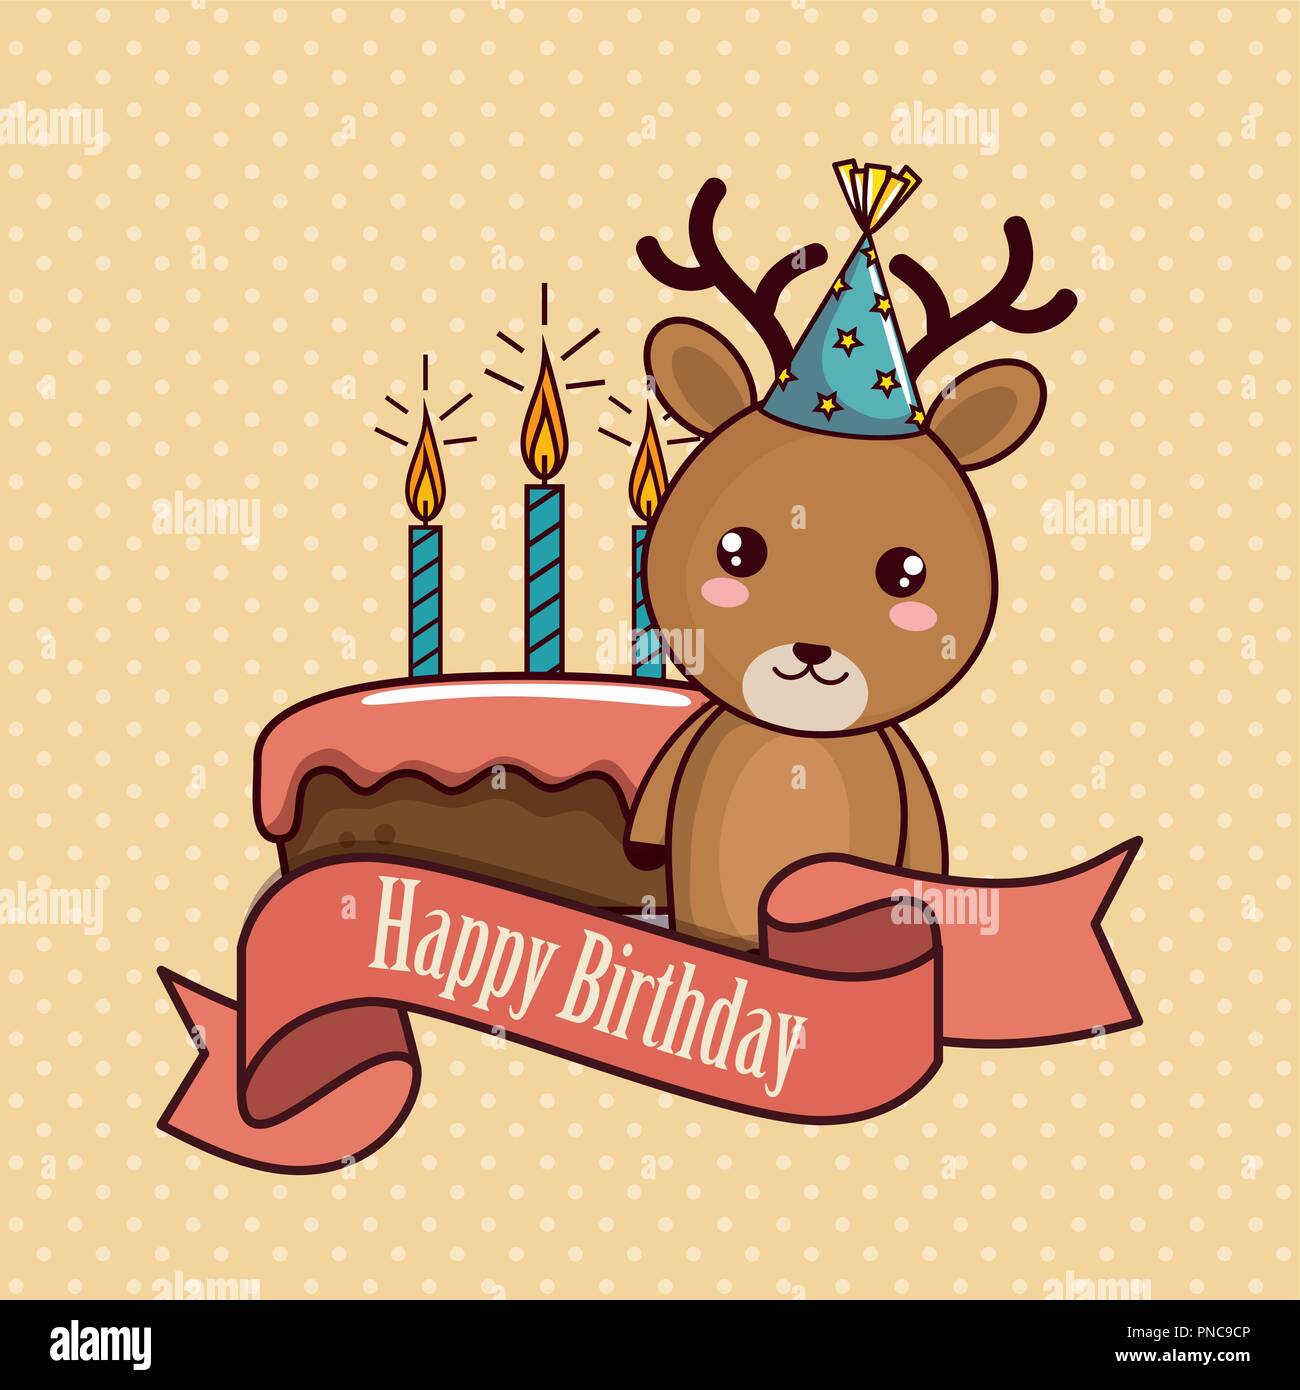 Happy Birthday Card With Cute Reindeer Stock Vector Art